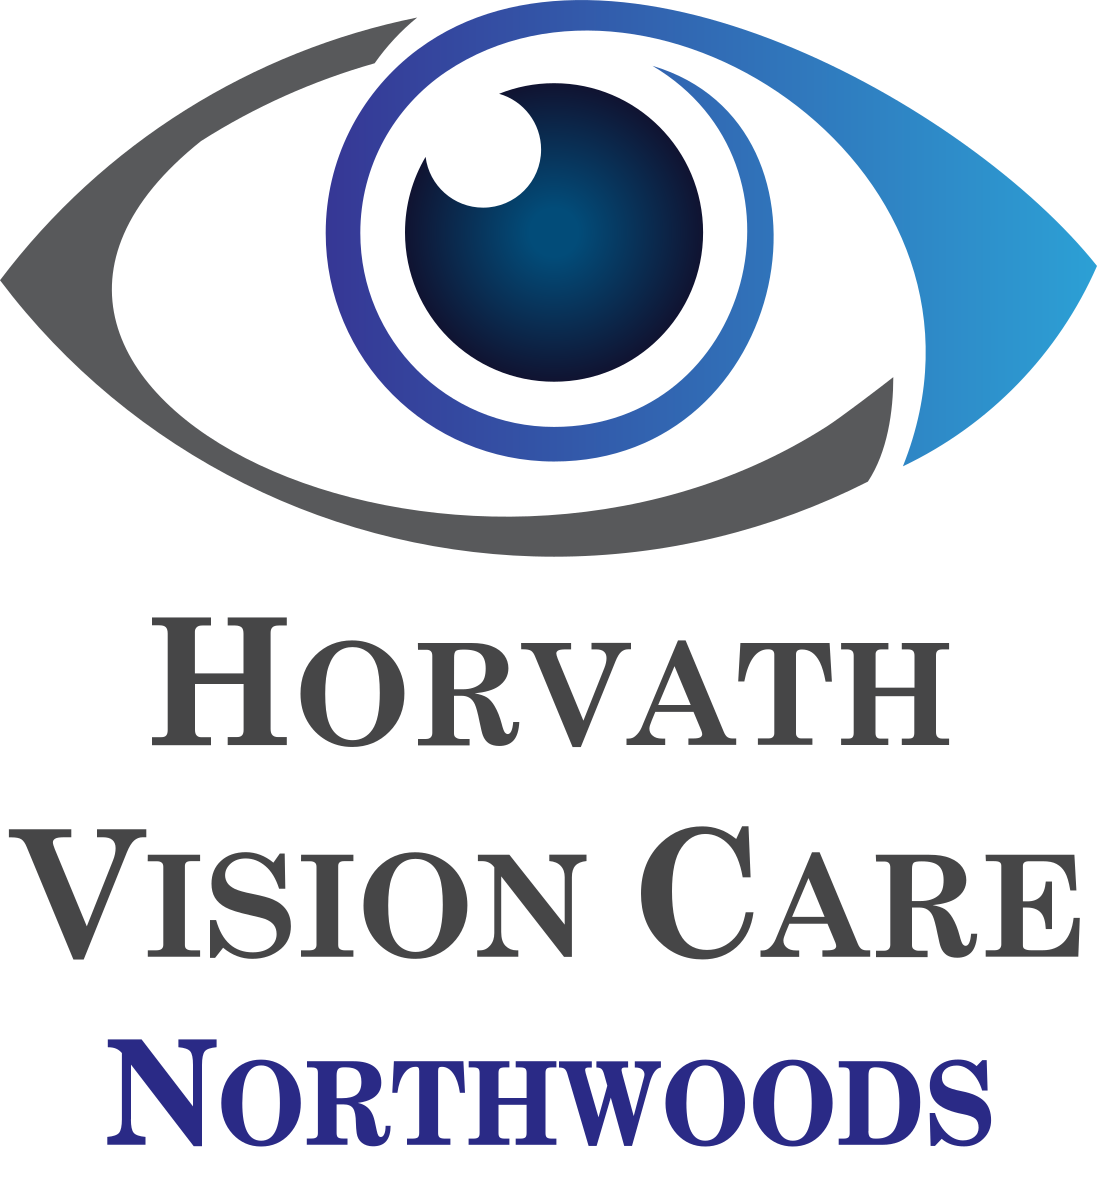 Horvath Vision Care - Northwoods Logo